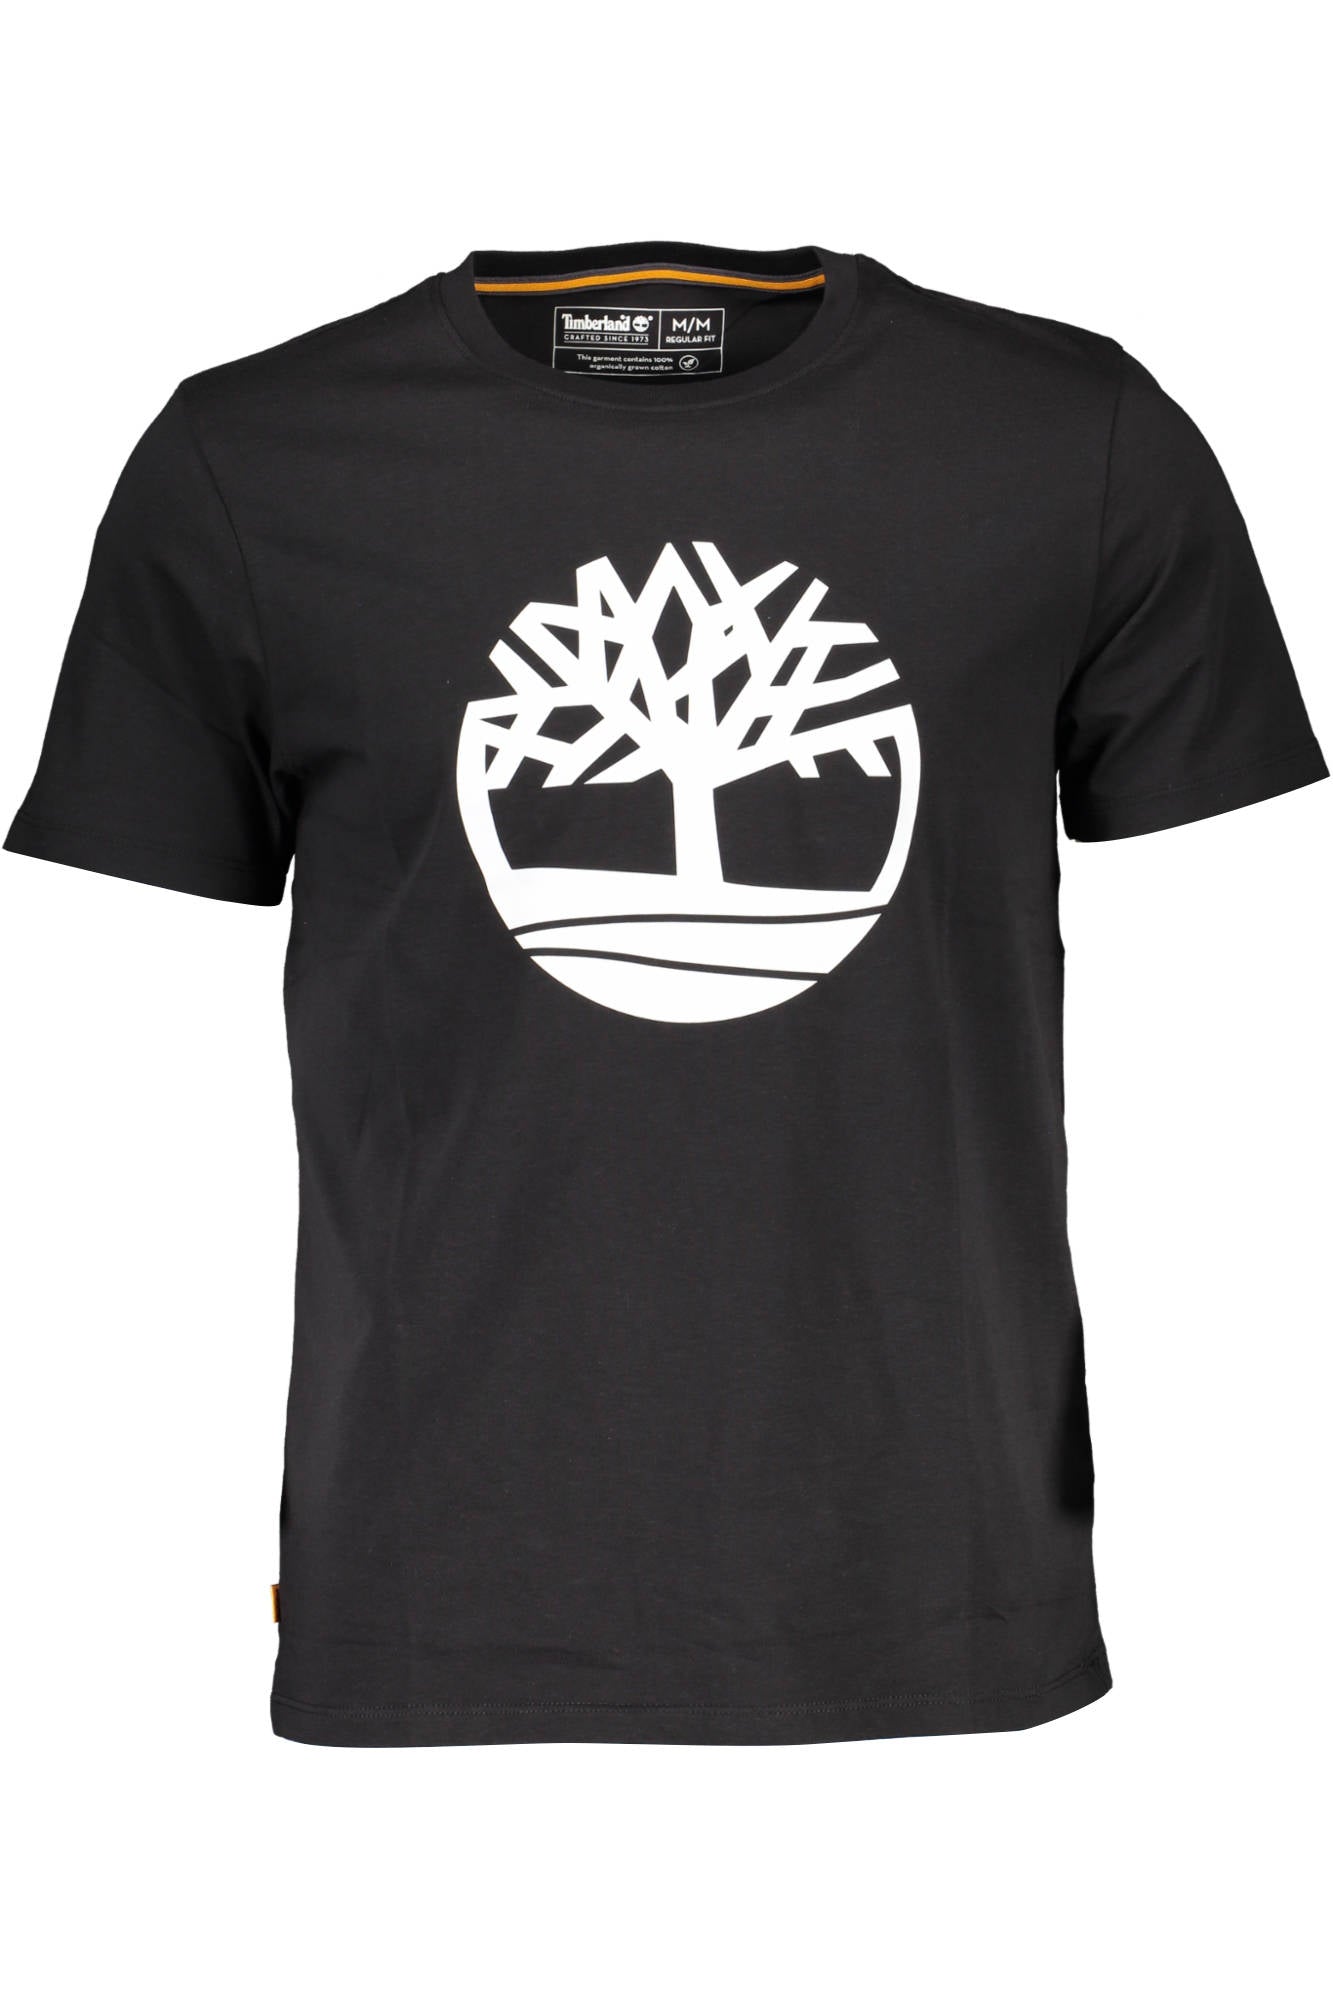 Timberland Black Cotton T-Shirt - Fizigo